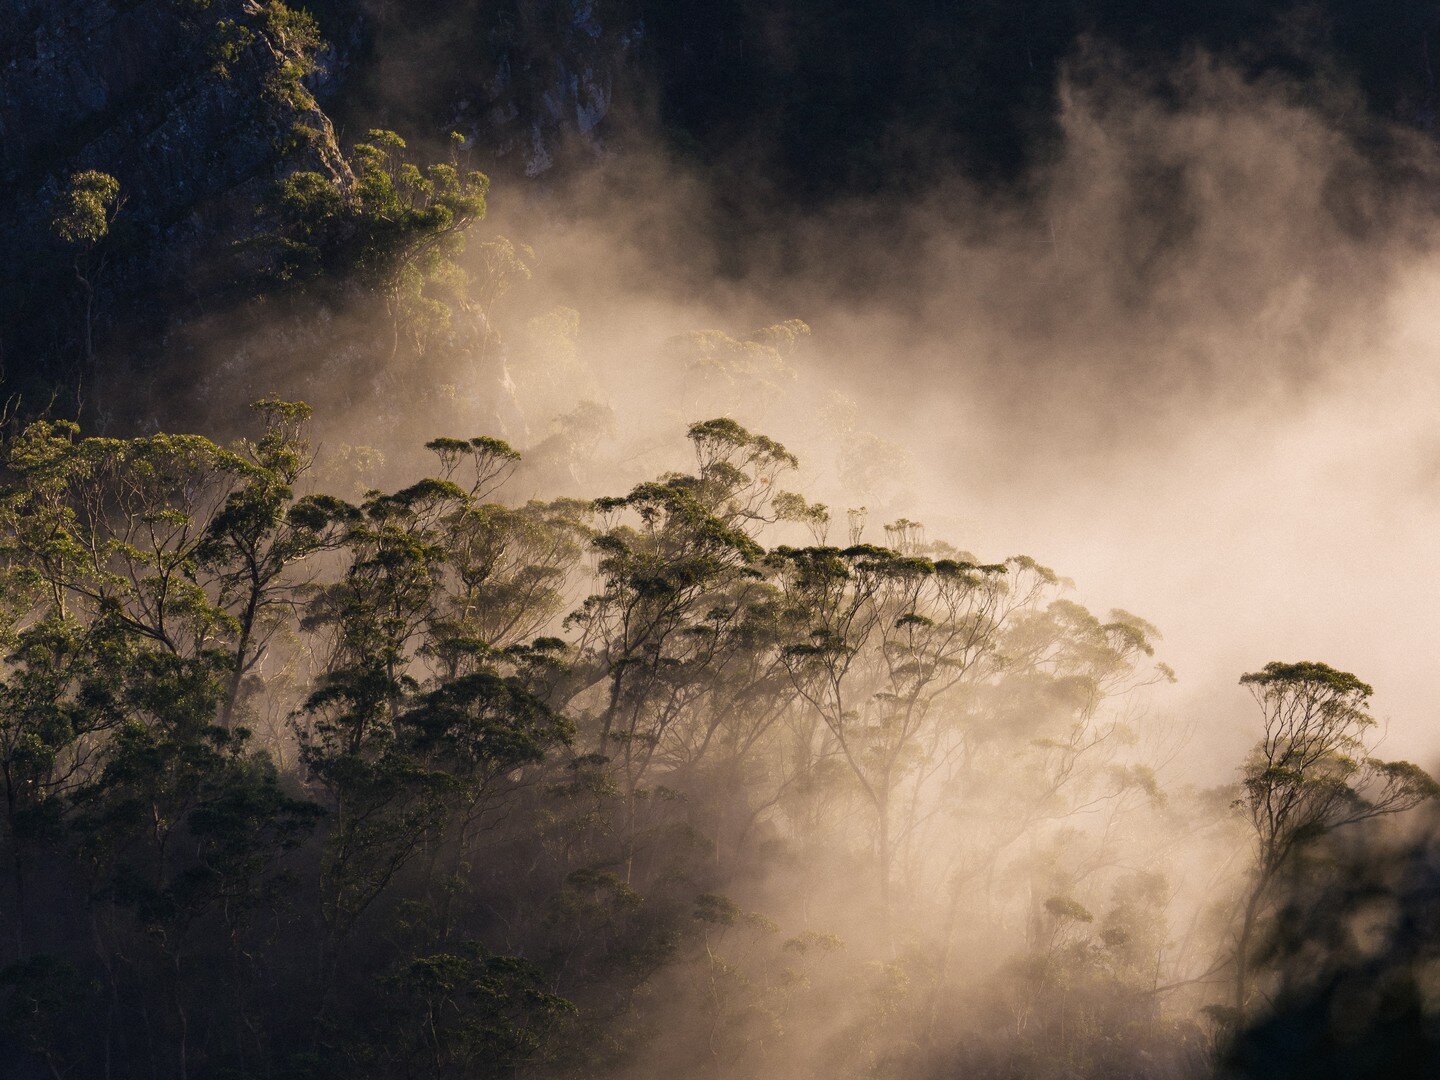 Glam Gum Gullies

#landscapephotography #sydney #canonpro #conservation #rainforest #documentary #canonr5 #mist #australia #bluemountains #dop #filmmaker